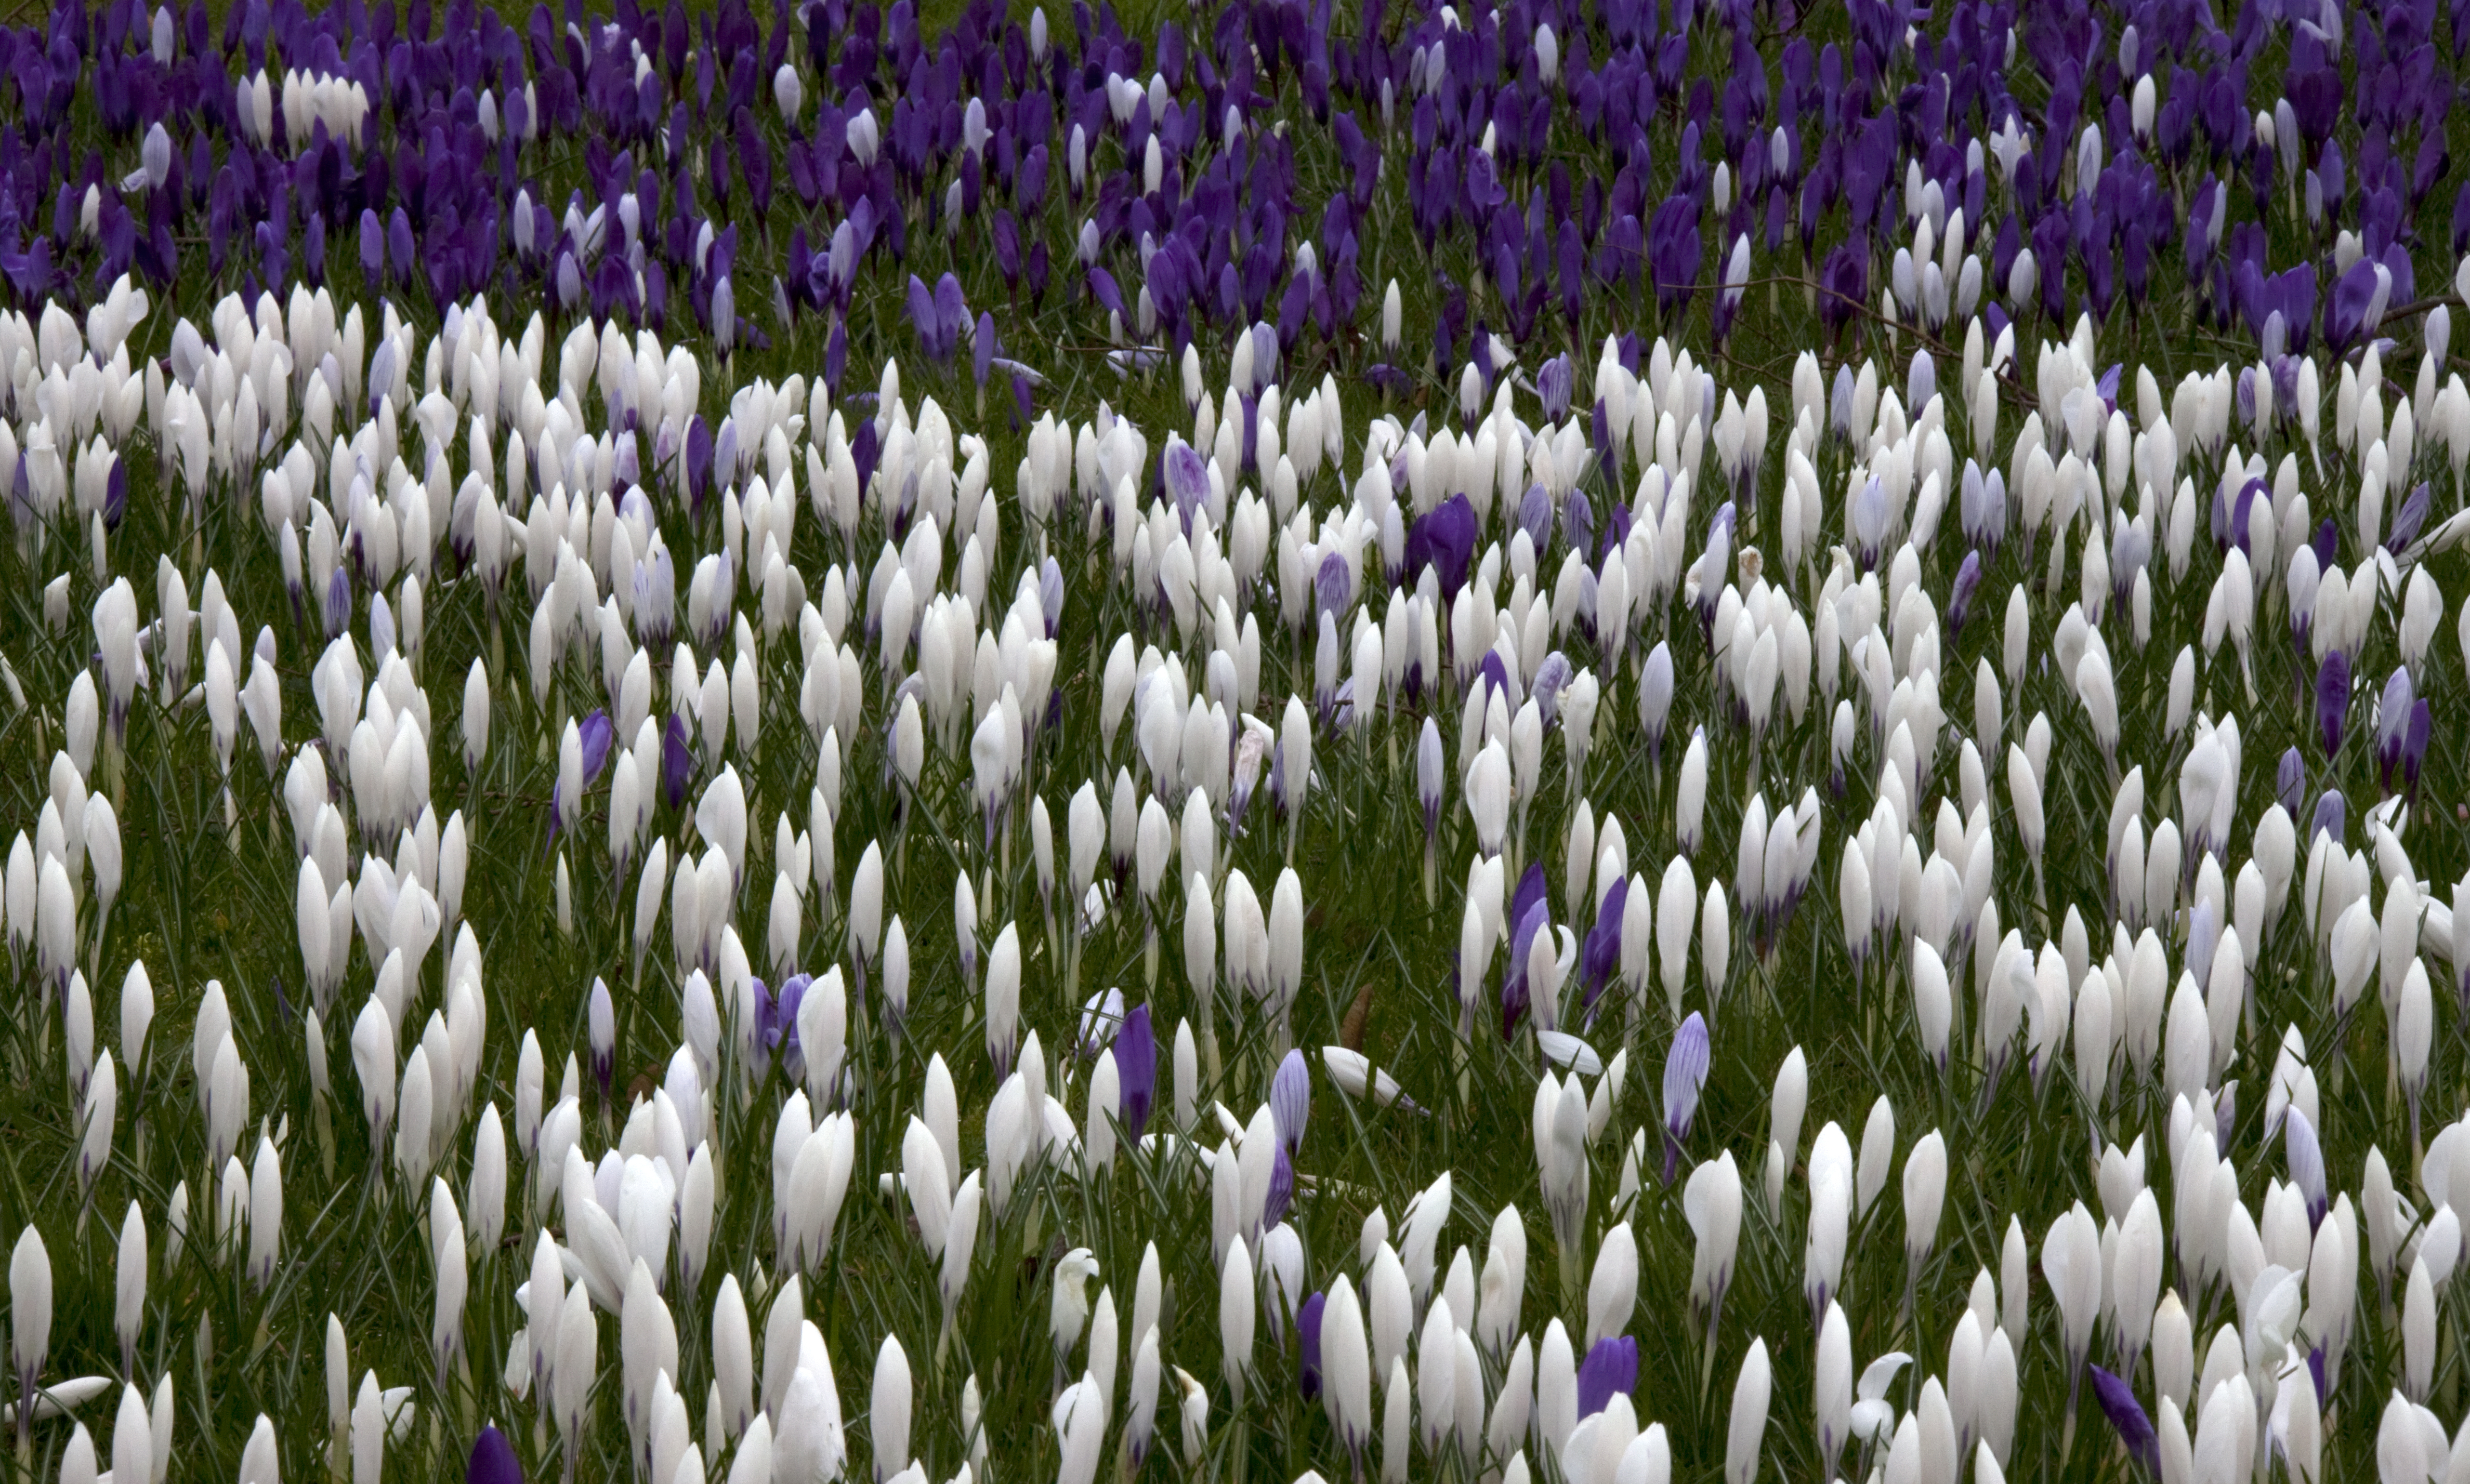 File:Crocuses white and purple (5493965991).jpg - Wikimedia Commons